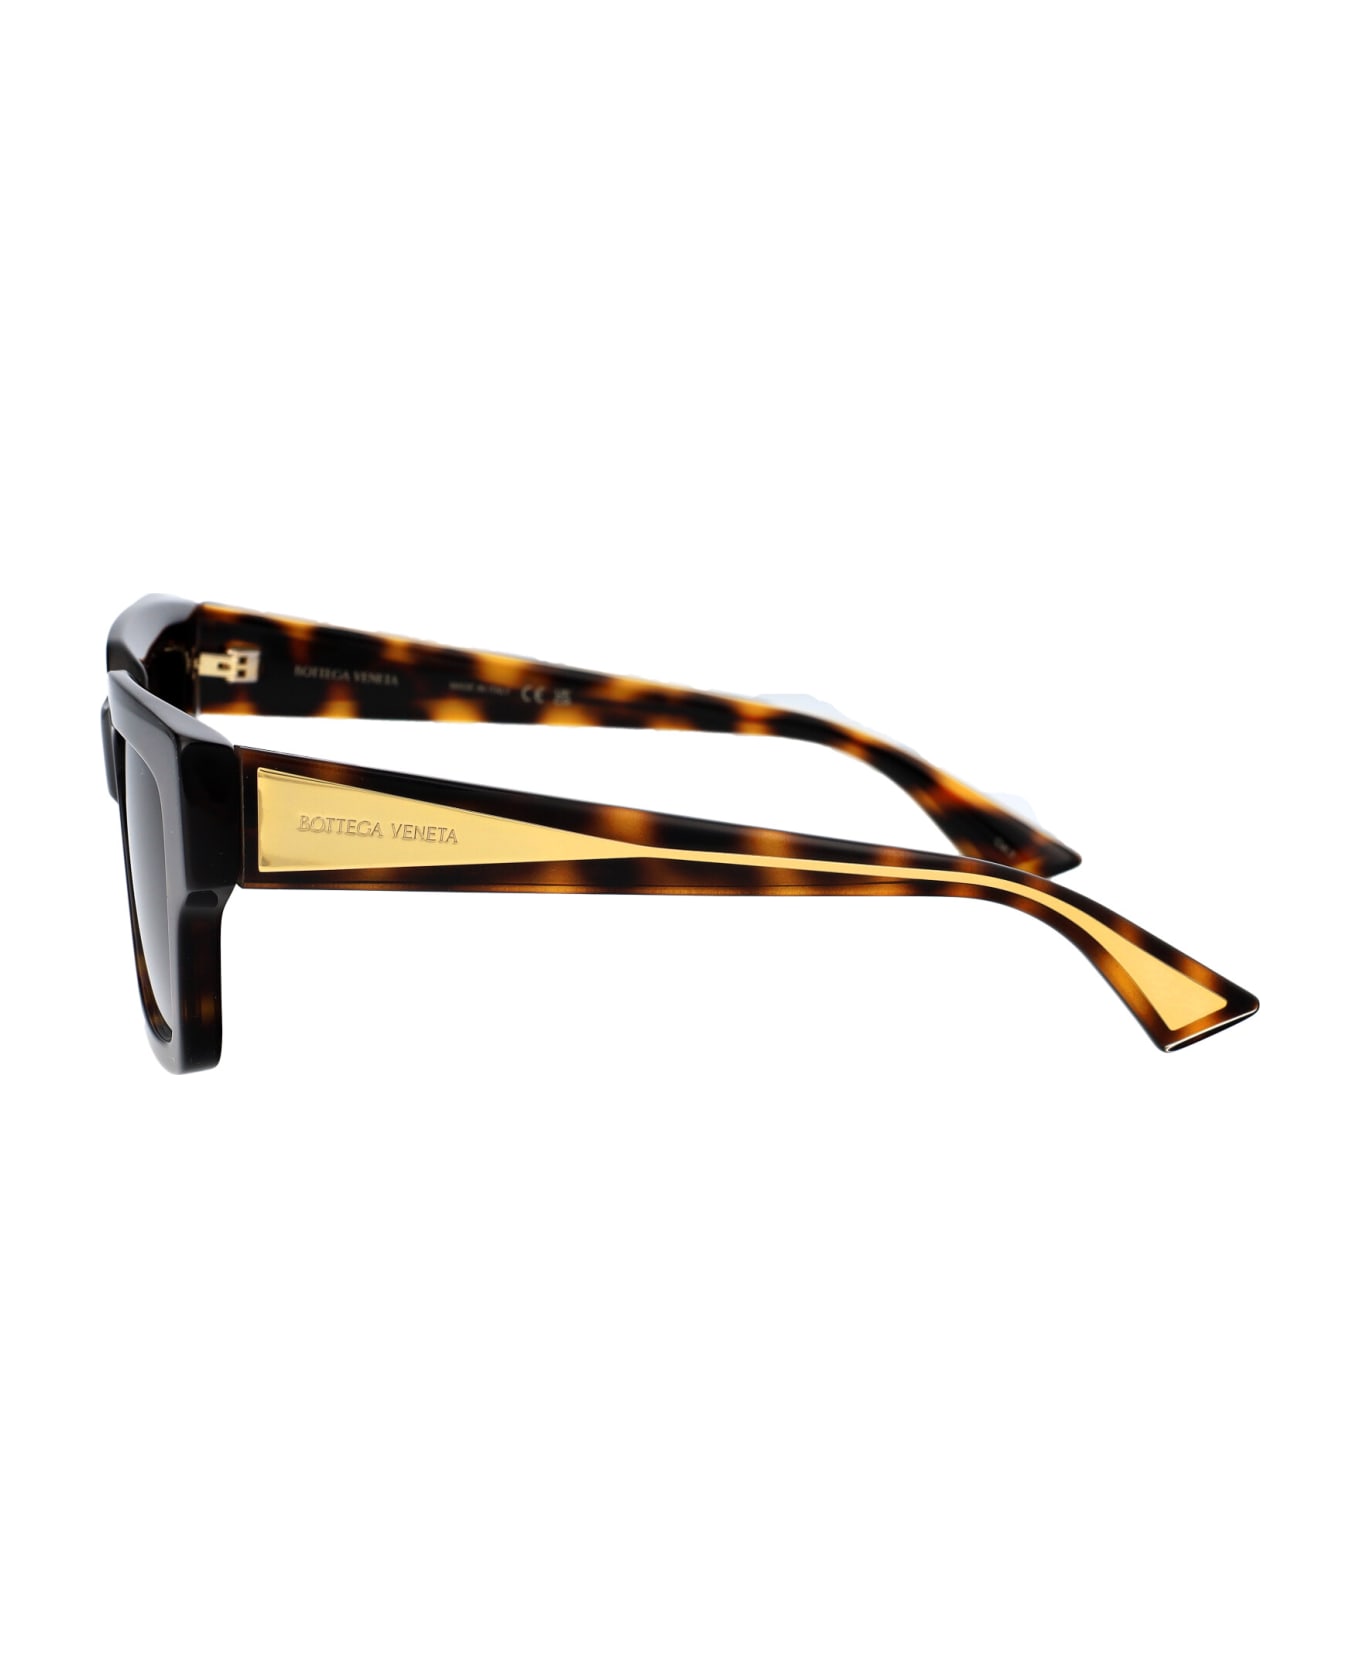 Bottega Veneta Eyewear Bv1276s Sunglasses - 002 HAVANA CRYSTAL BROWN